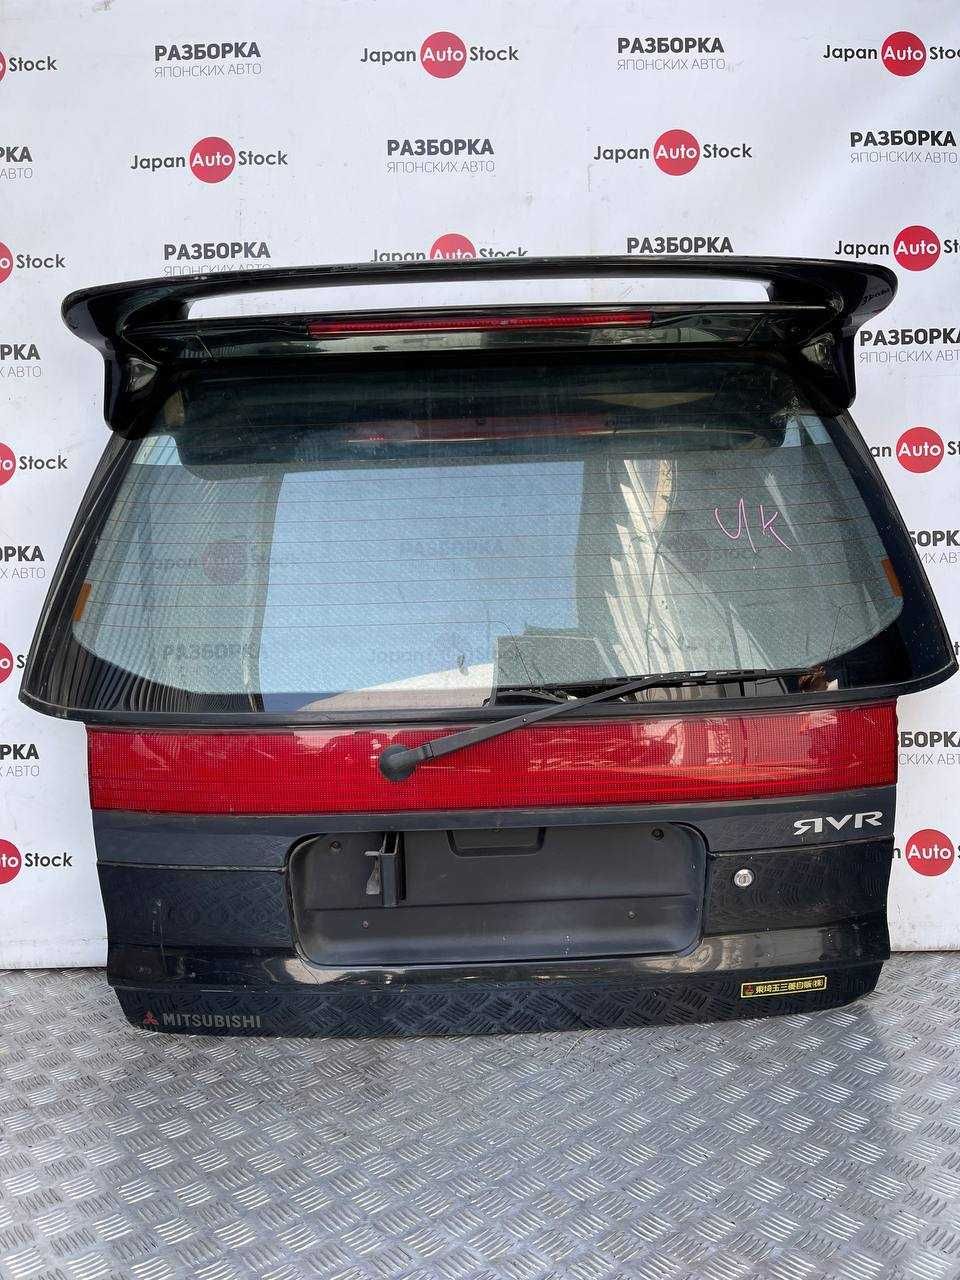 Крышка багажника, ляда Mitsubishi Space Wagon, год 1994-1997